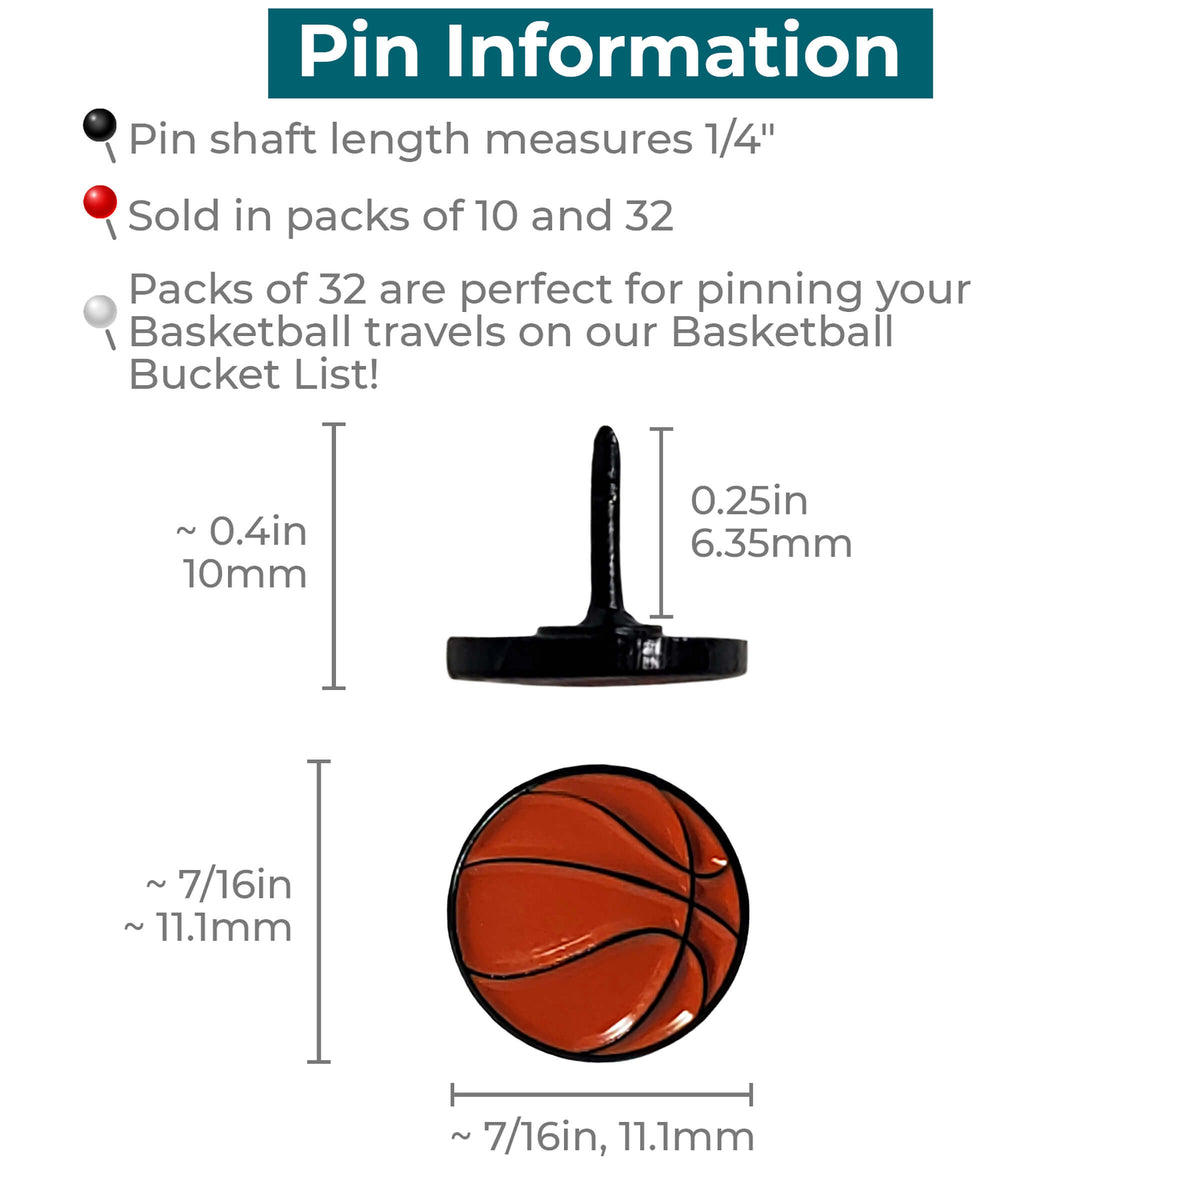 Dimensions of Basketball Push Pins